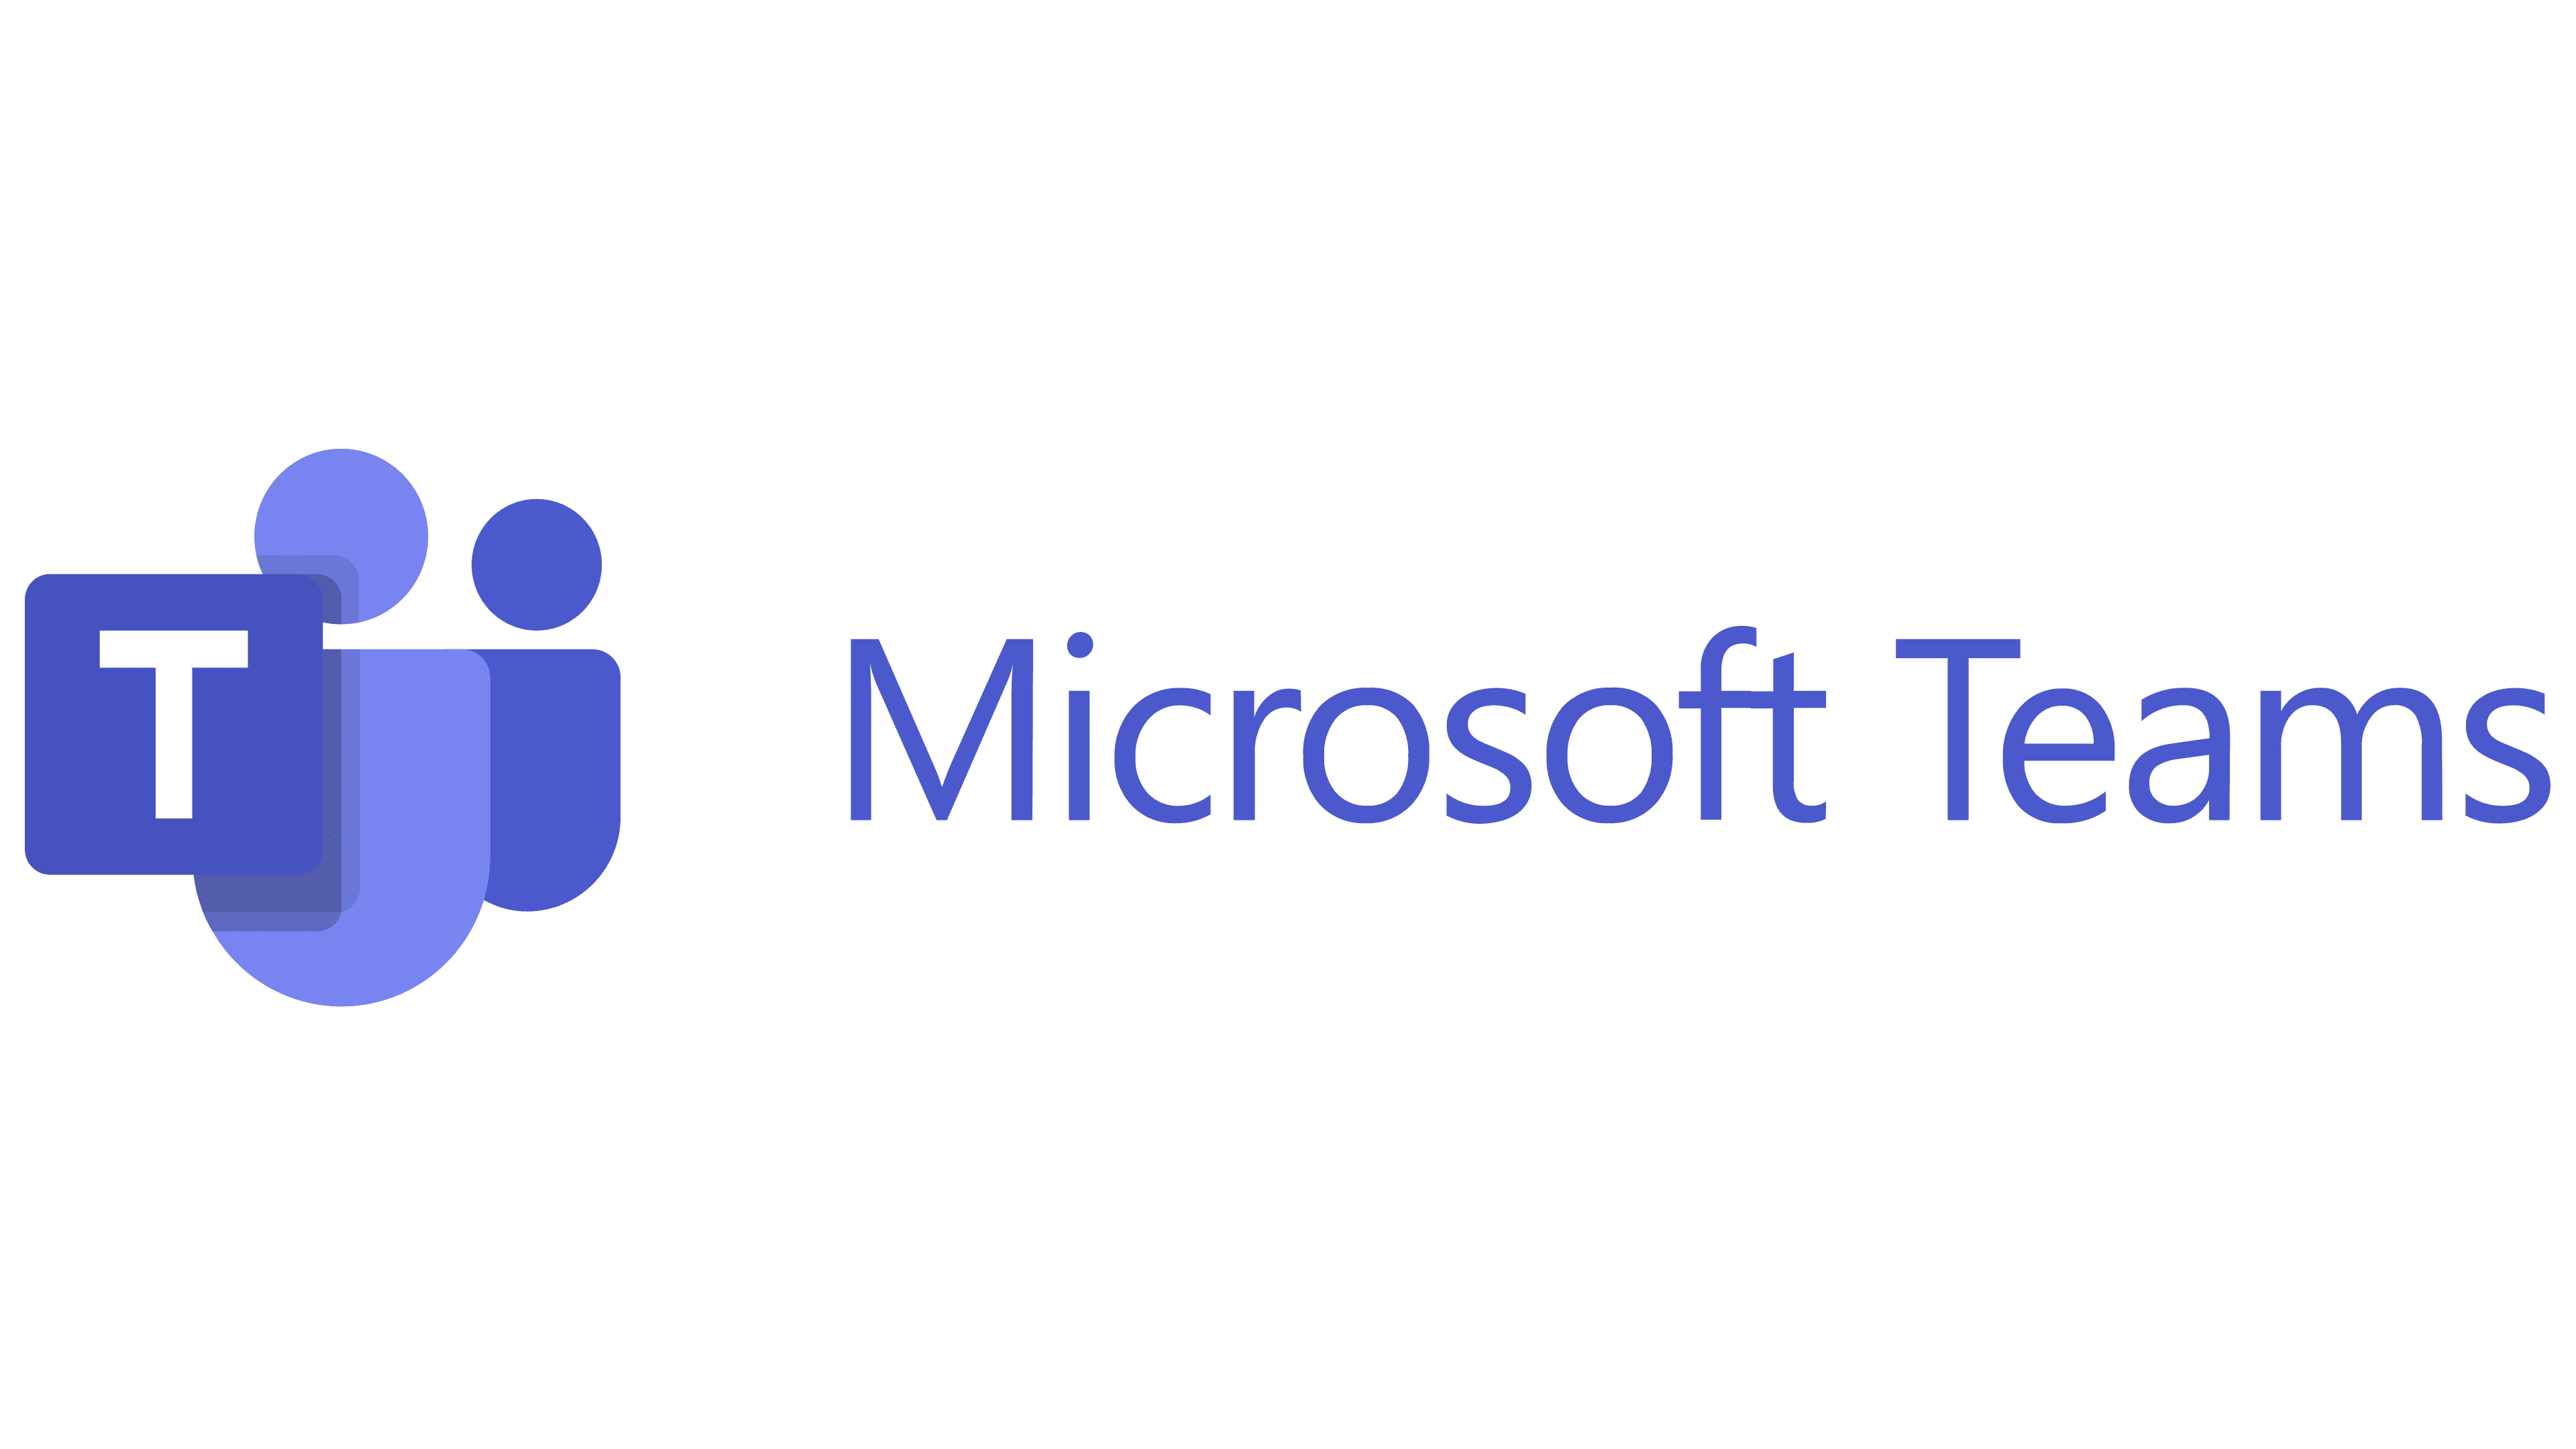 Microsoft Teams desktop clients to get spatial audio support soon